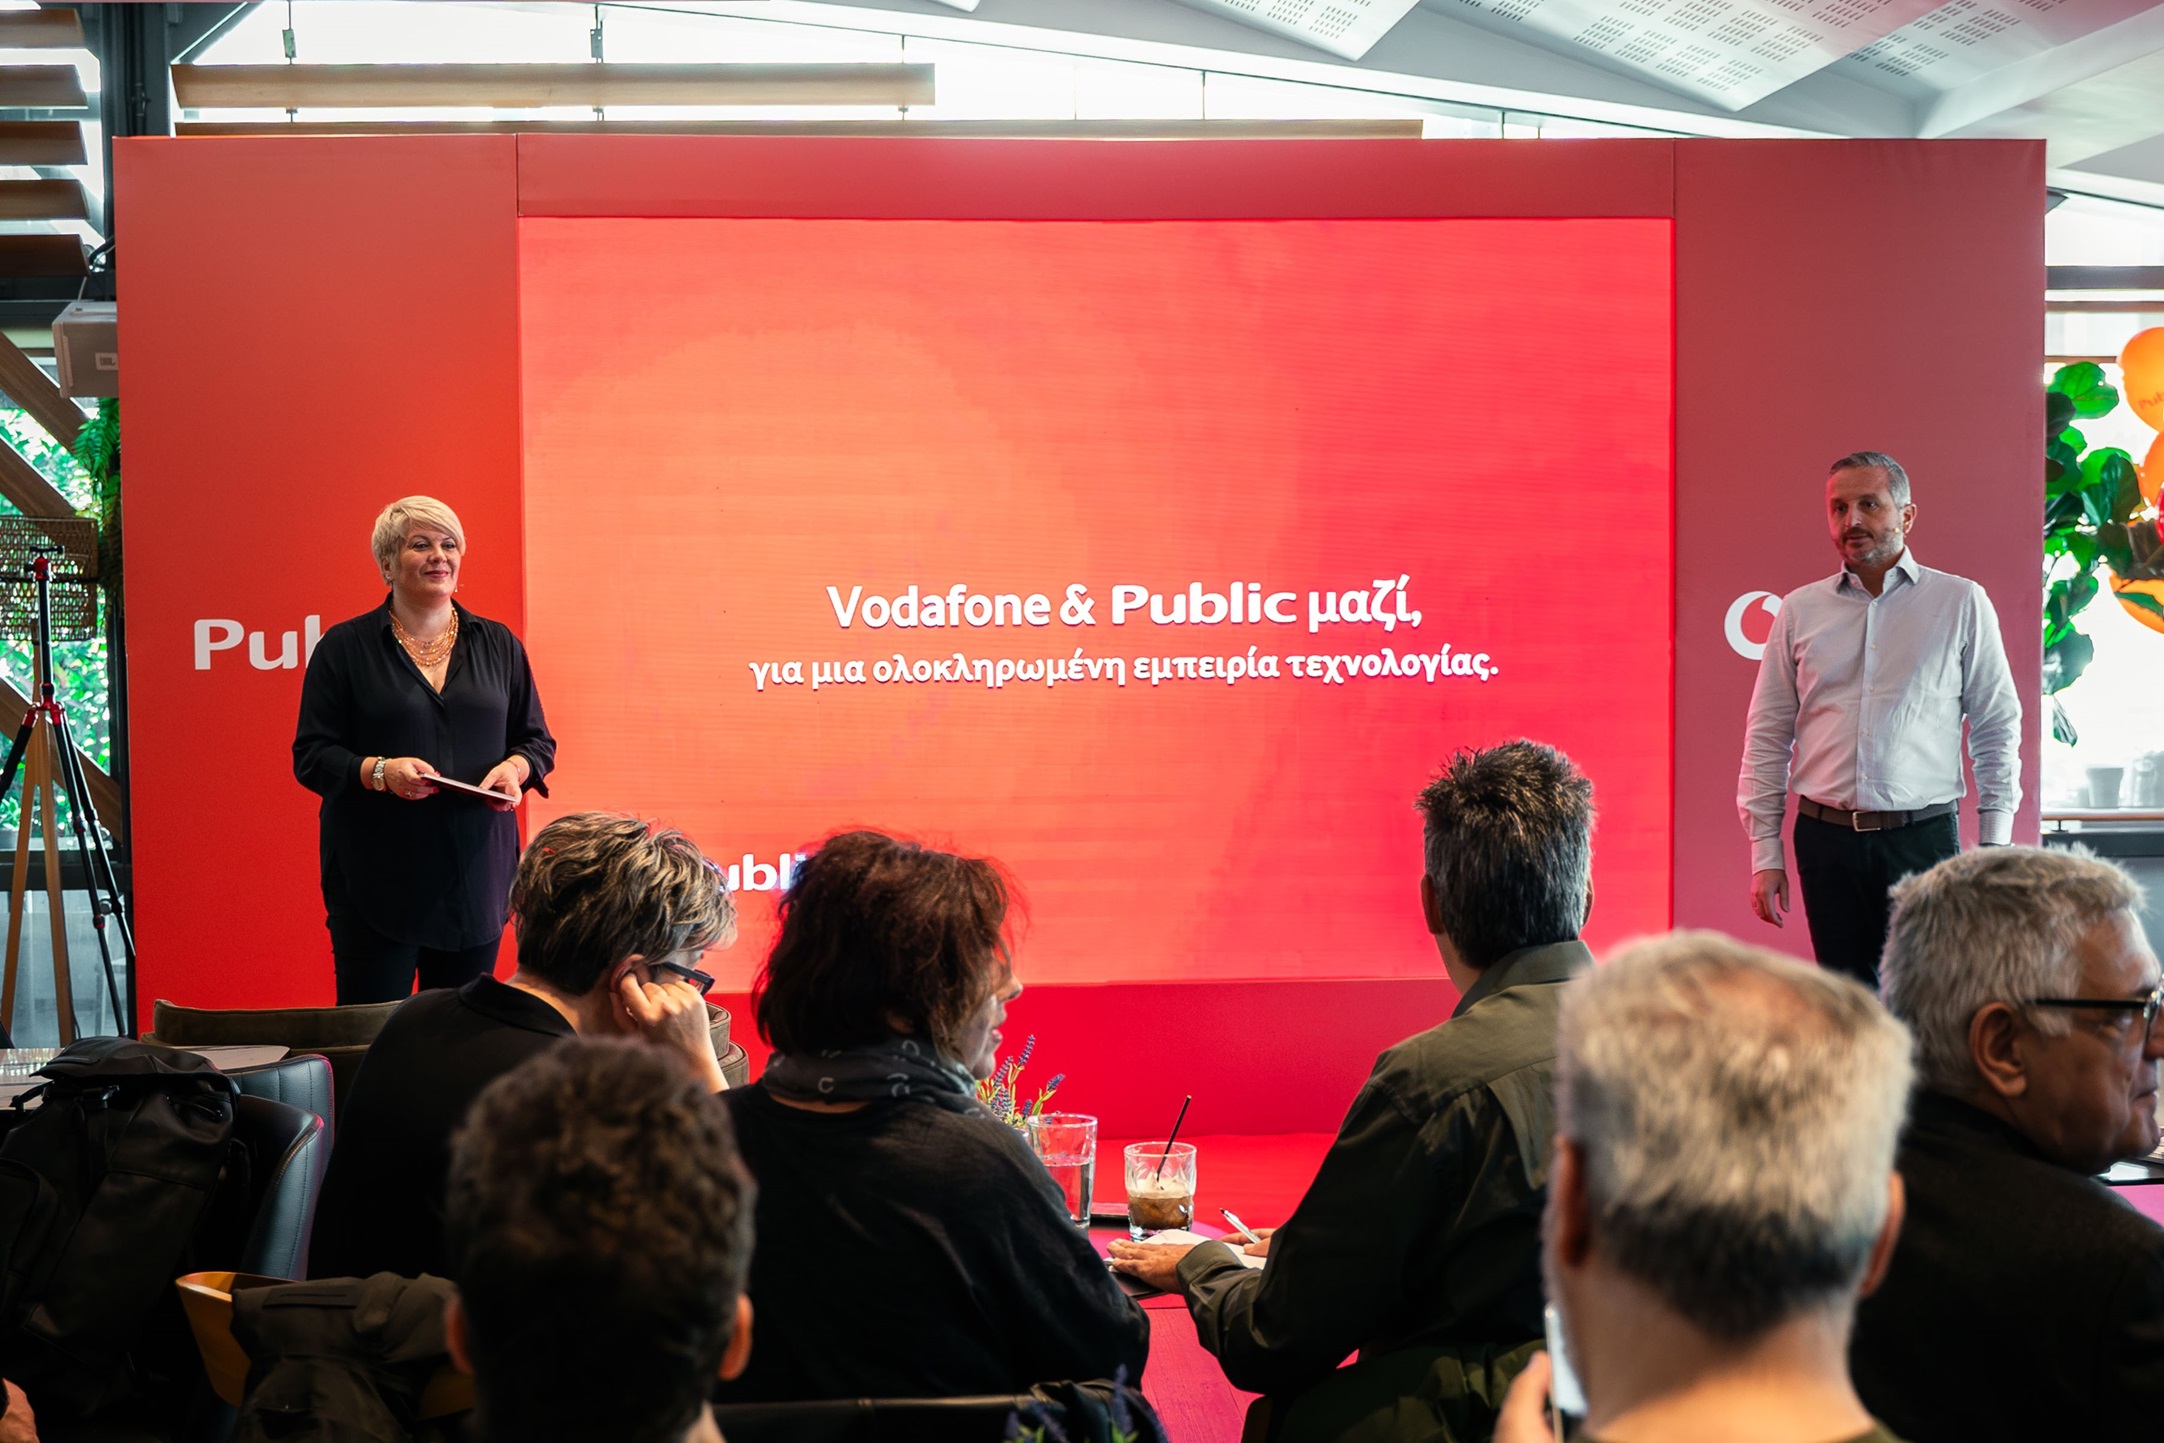 Vodafone Ελλάδας και Public μαζί – Νέα στρατηγική συνεργασία για μία ολοκληρωμένη εμπειρία τεχνολογίας